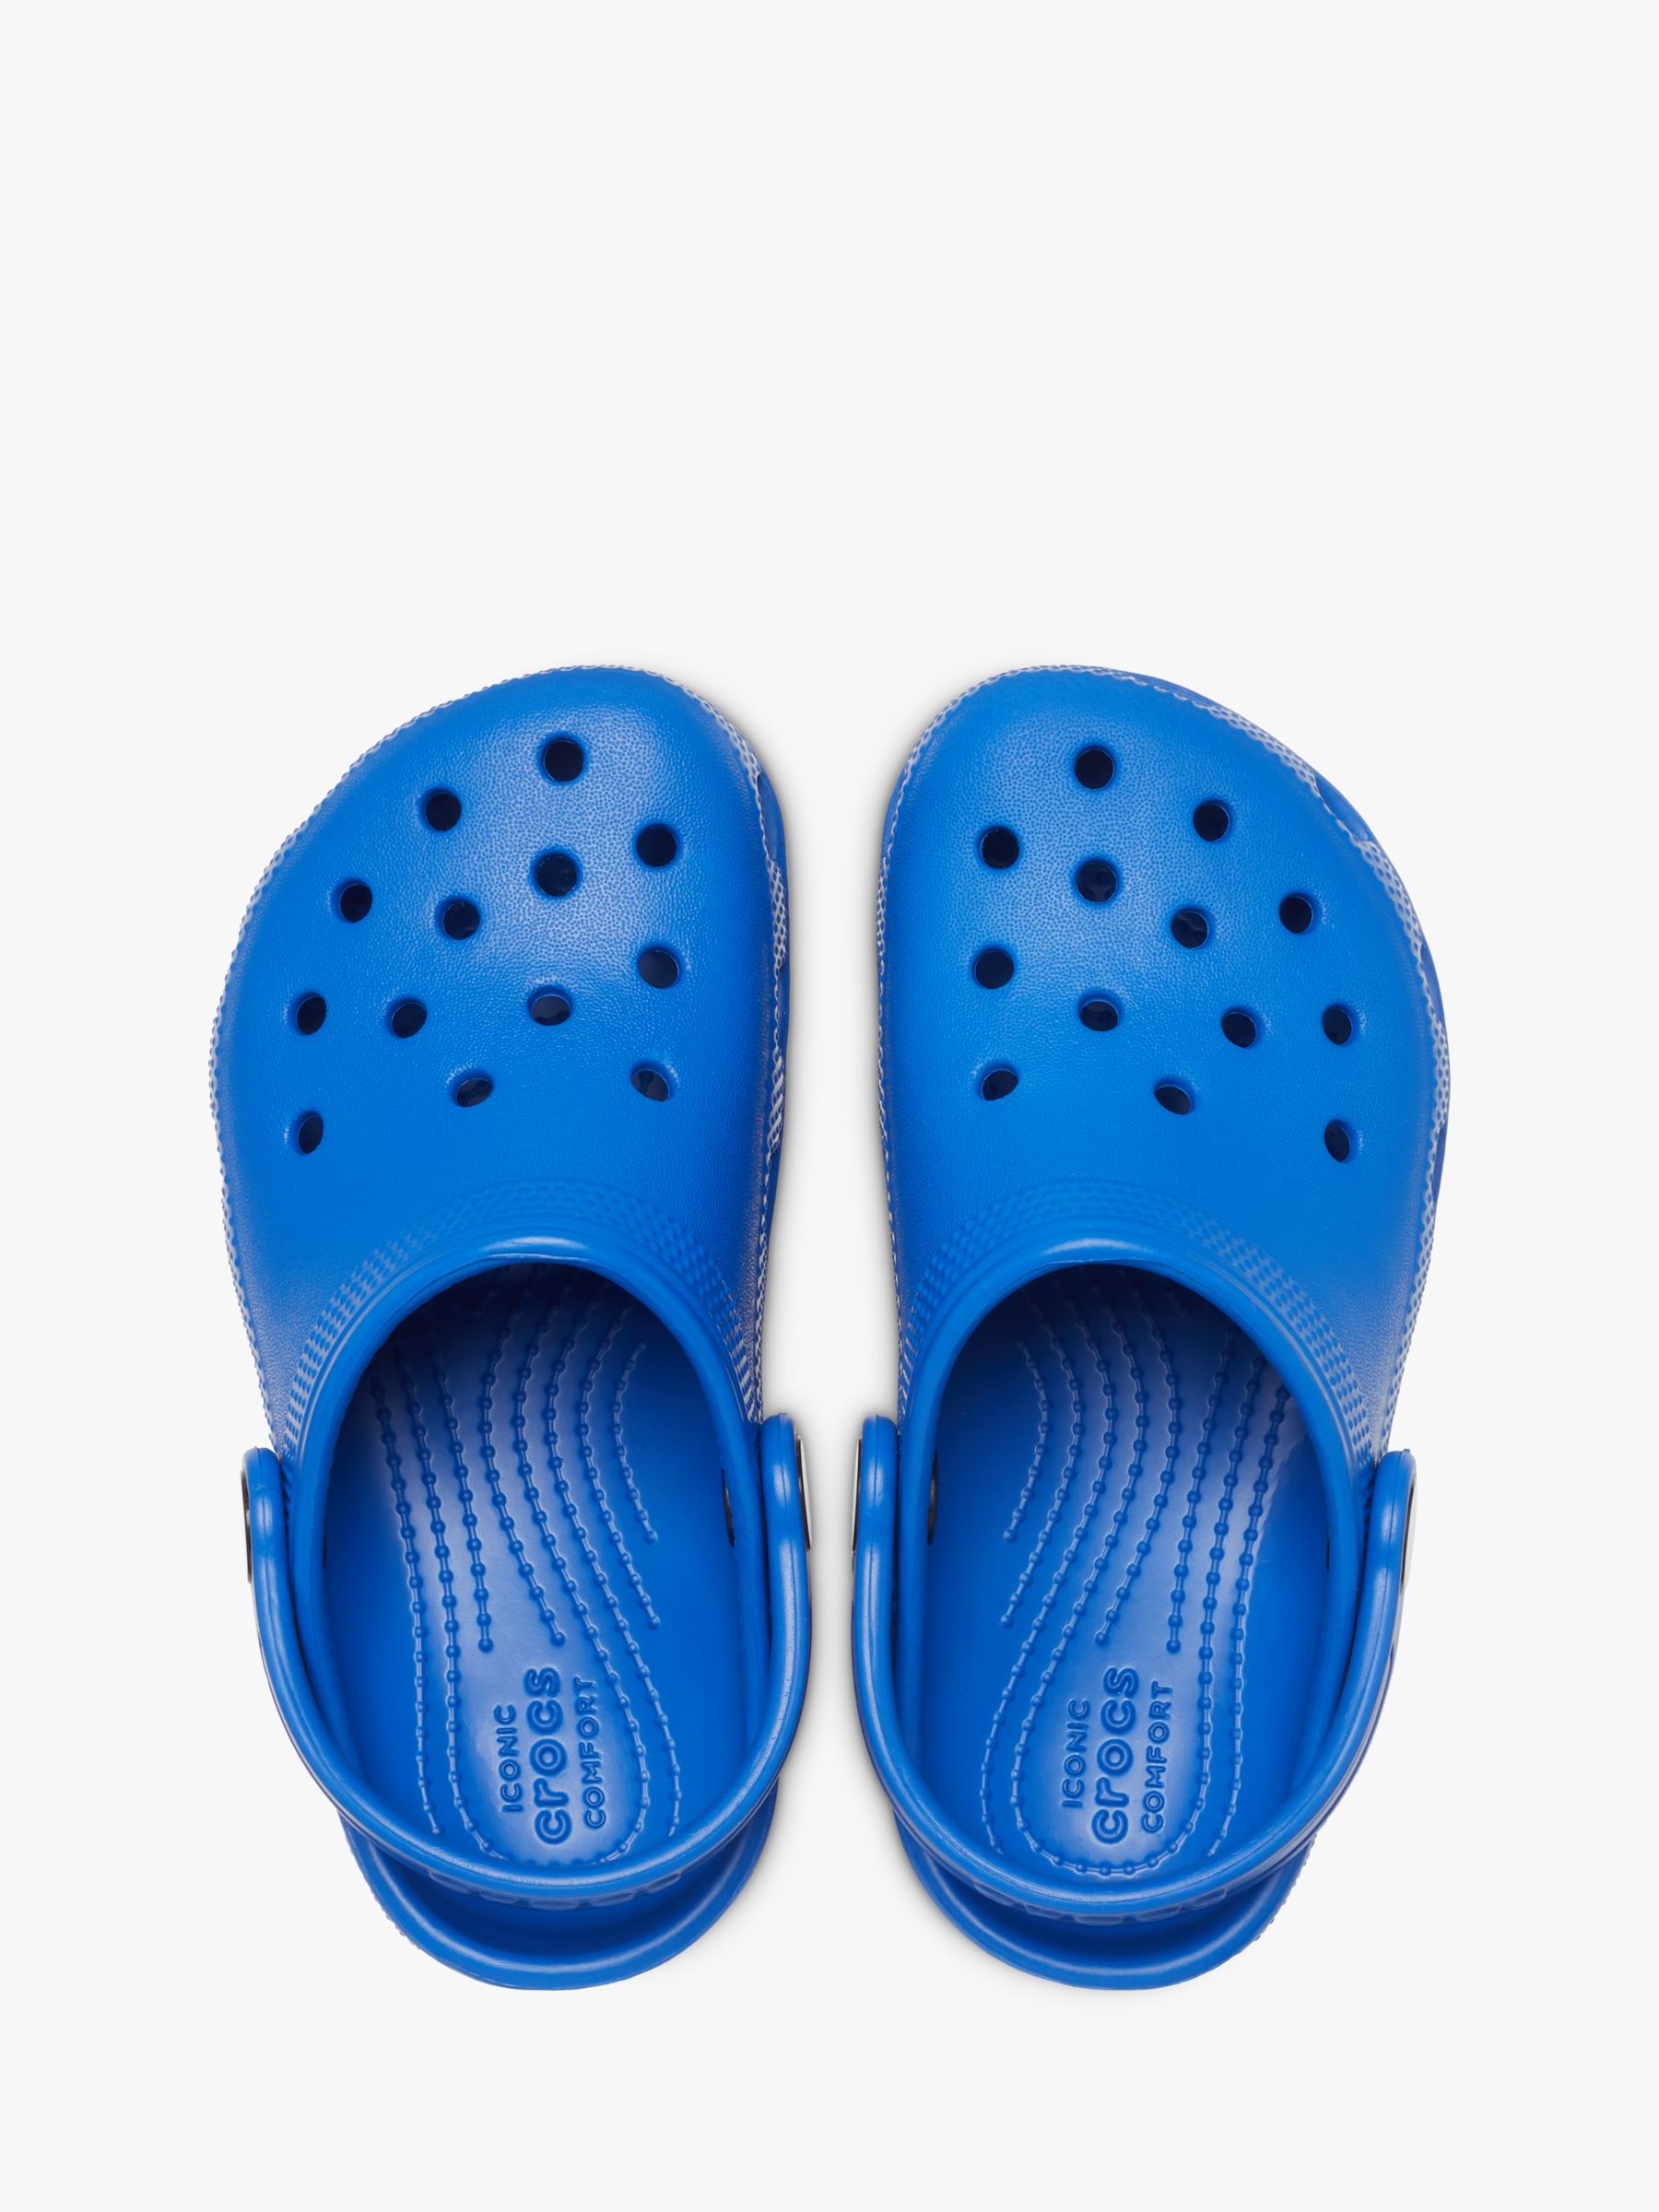 Crocs Kids' Classic Croc Clogs, Blue Bolt, 1